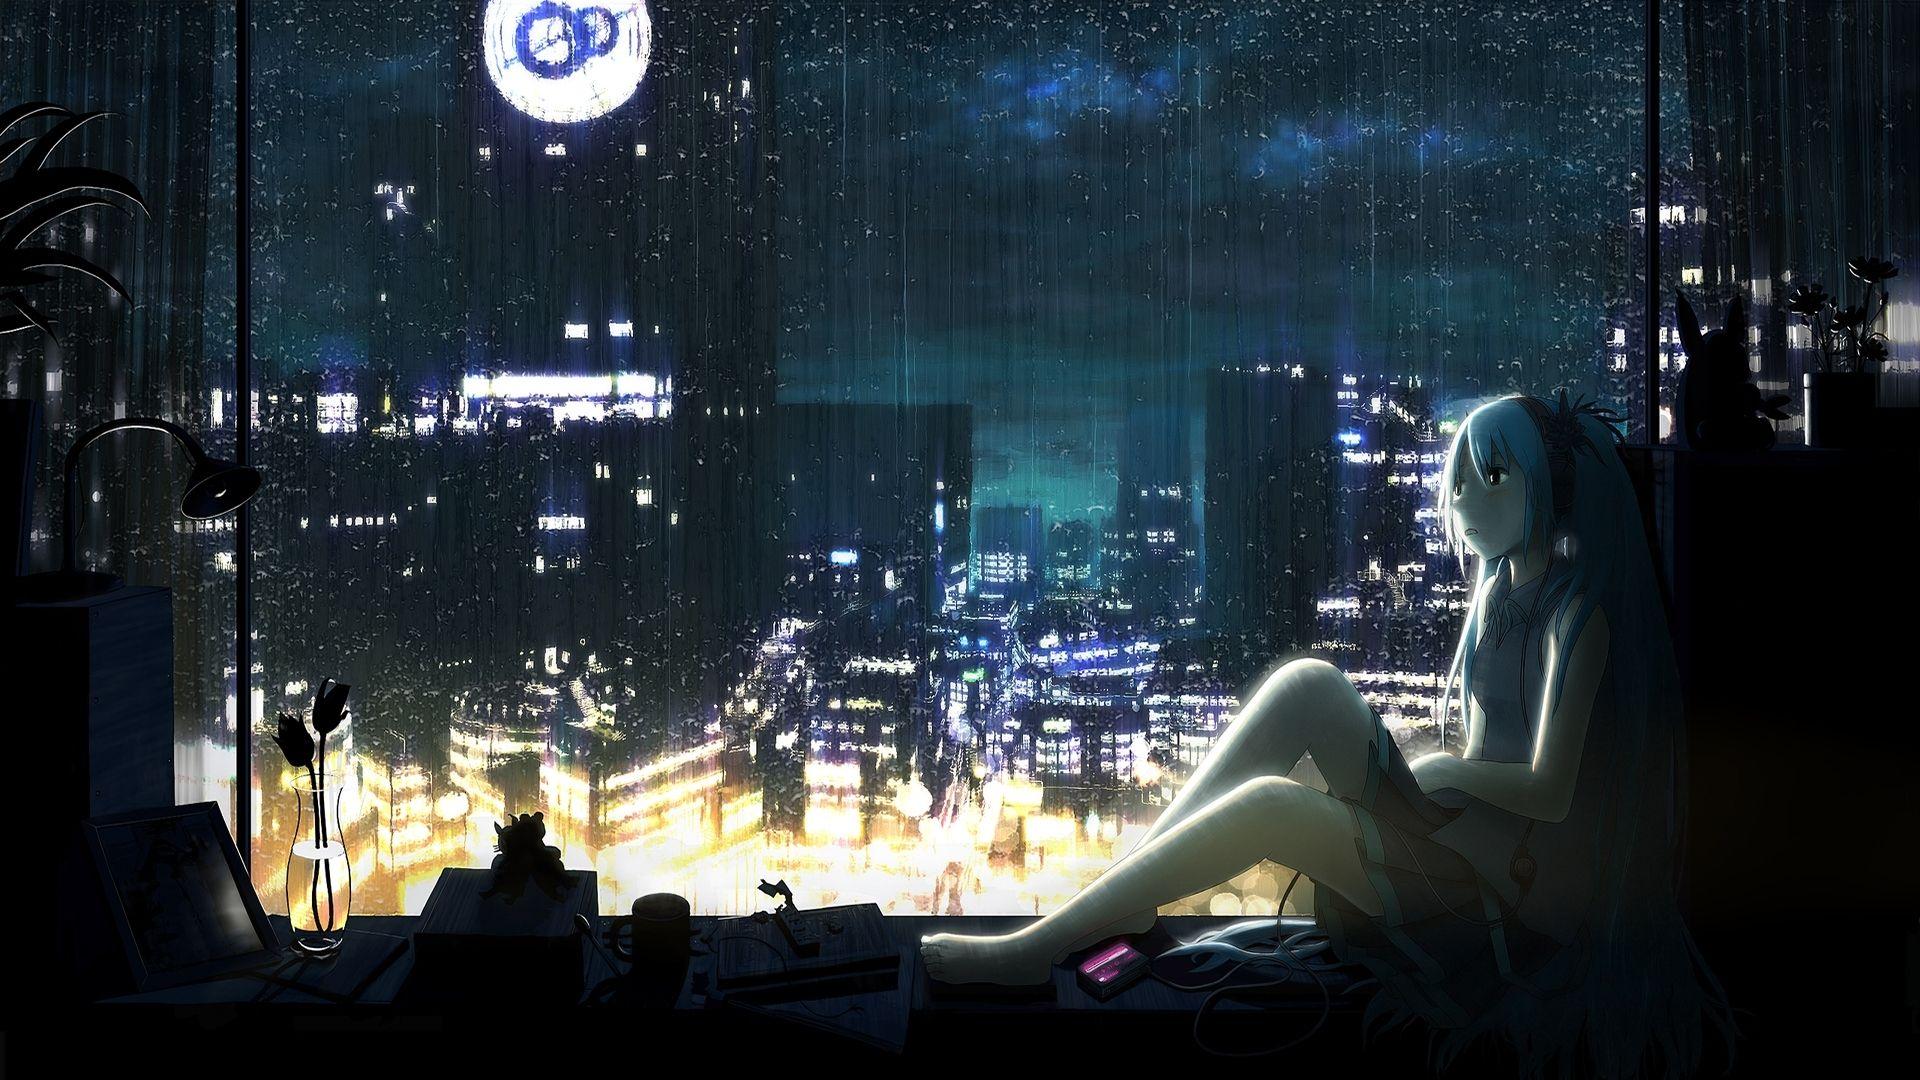 Awesome Anime Rain Wallpaper 42576 1920x1080 px